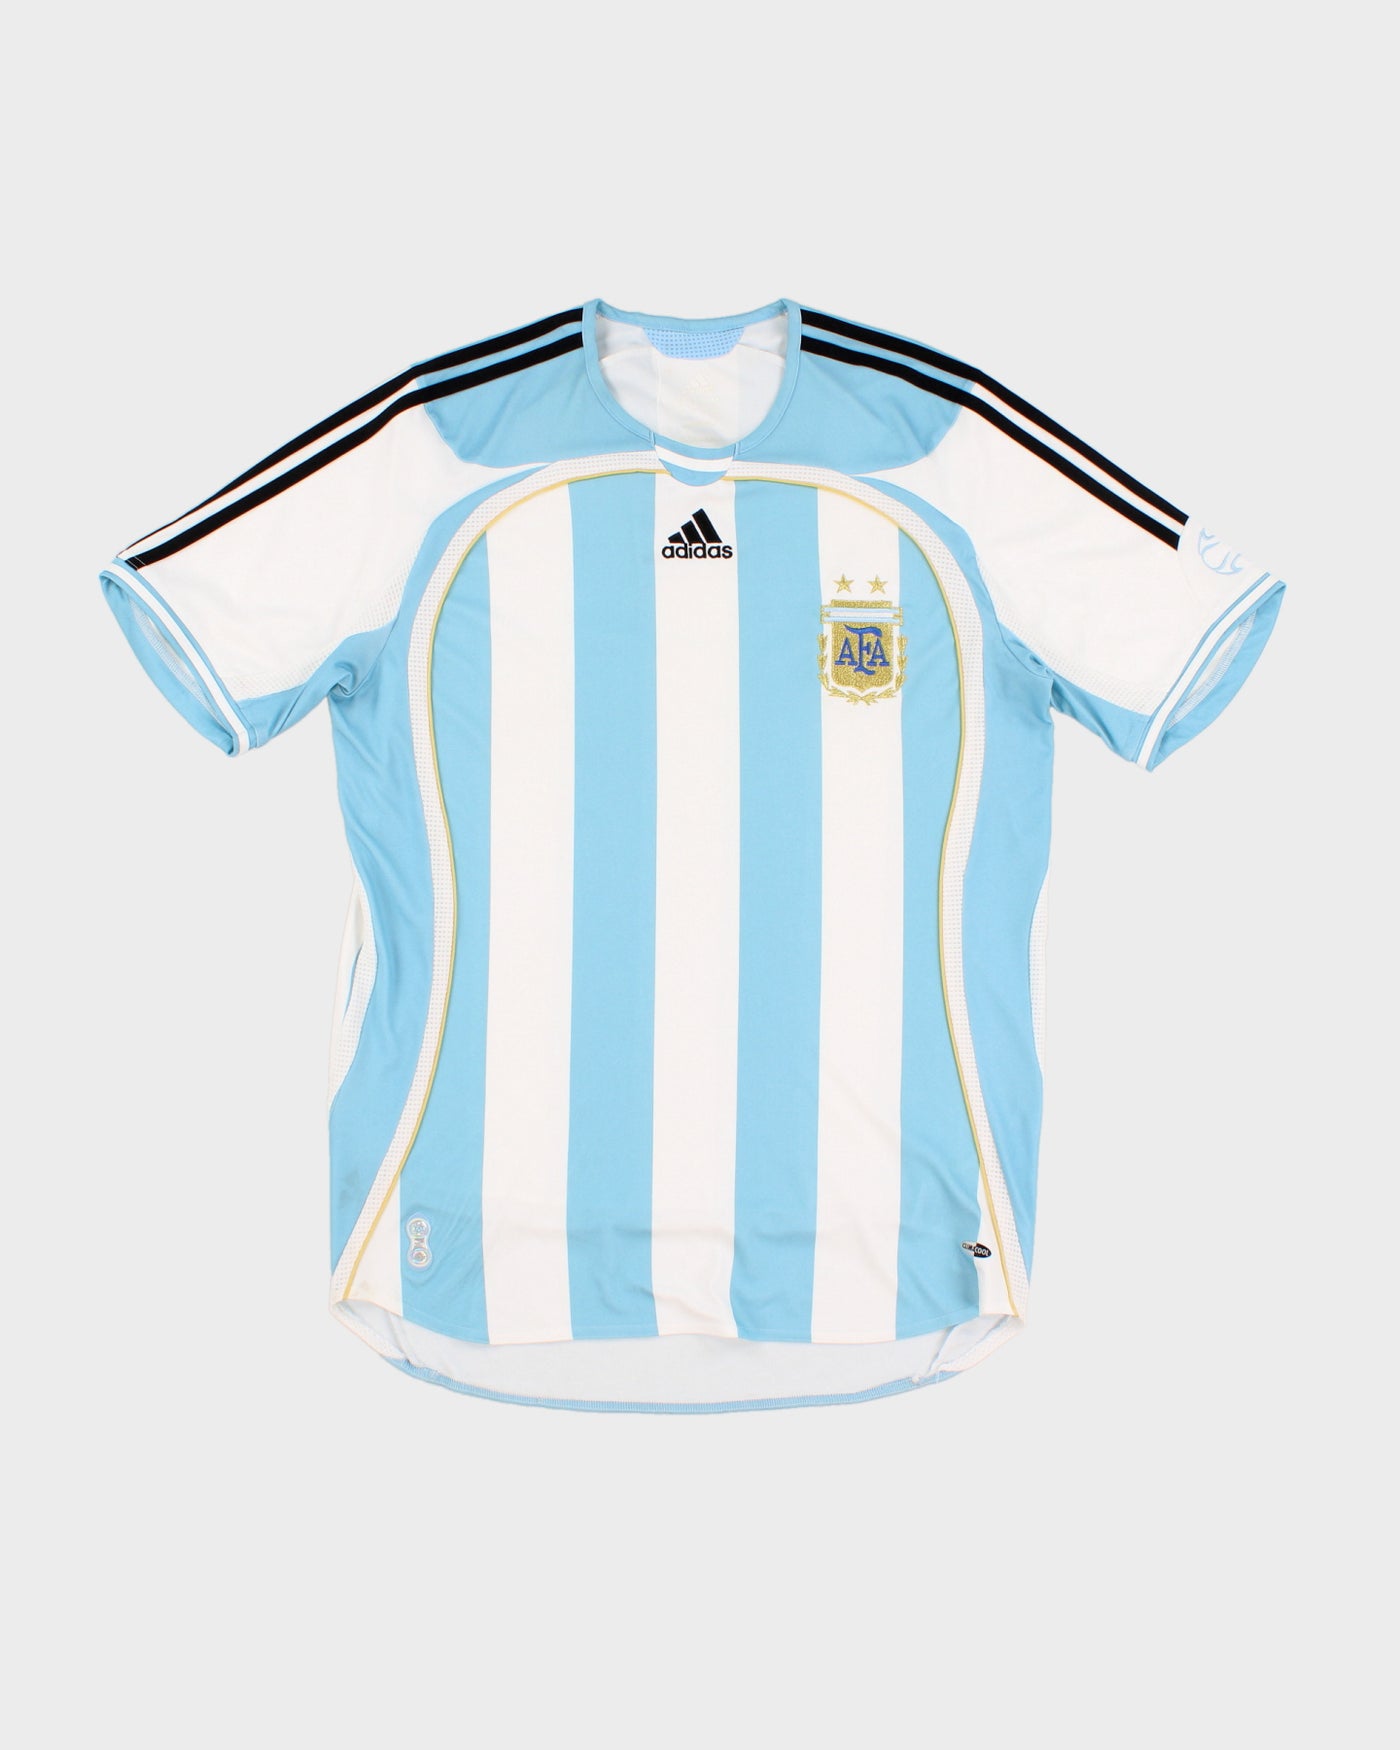 00s Adidas Argentina Football Shirt - M